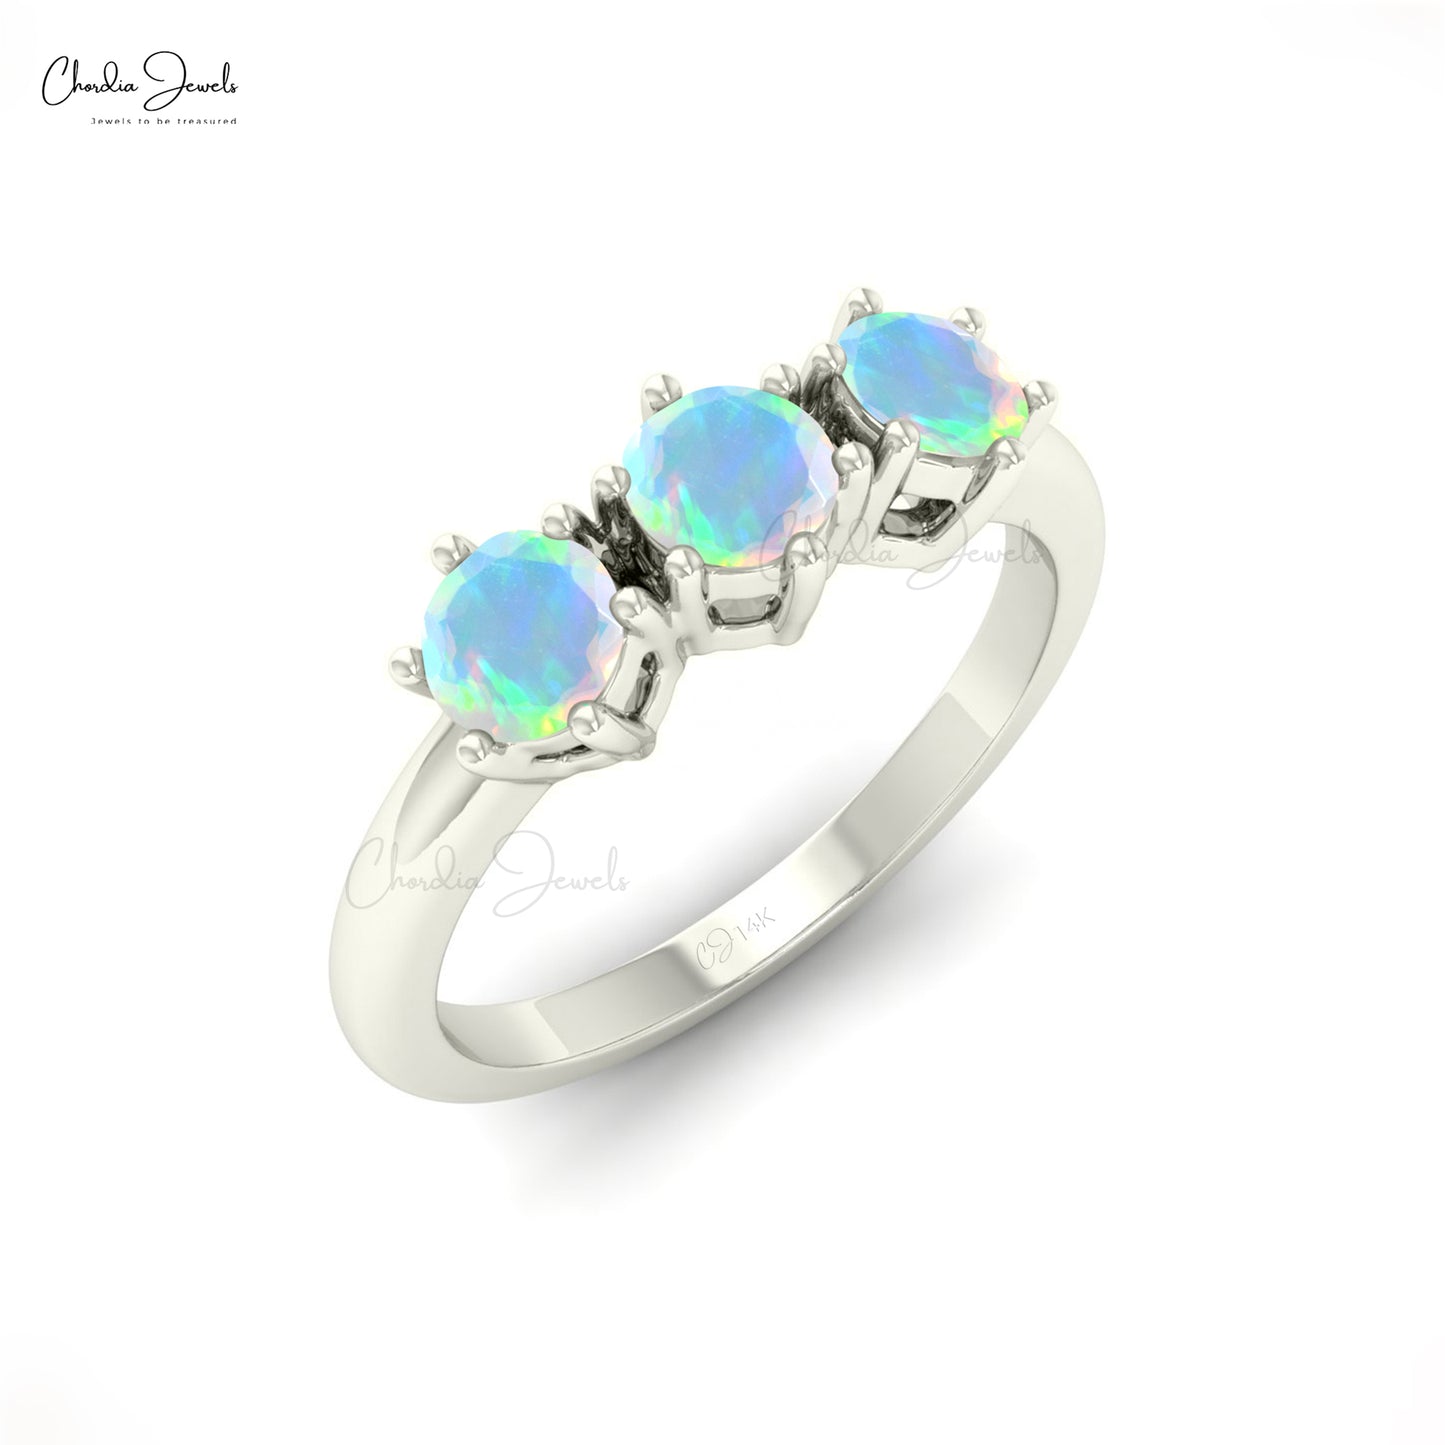 Buy Opal Dainty Ring